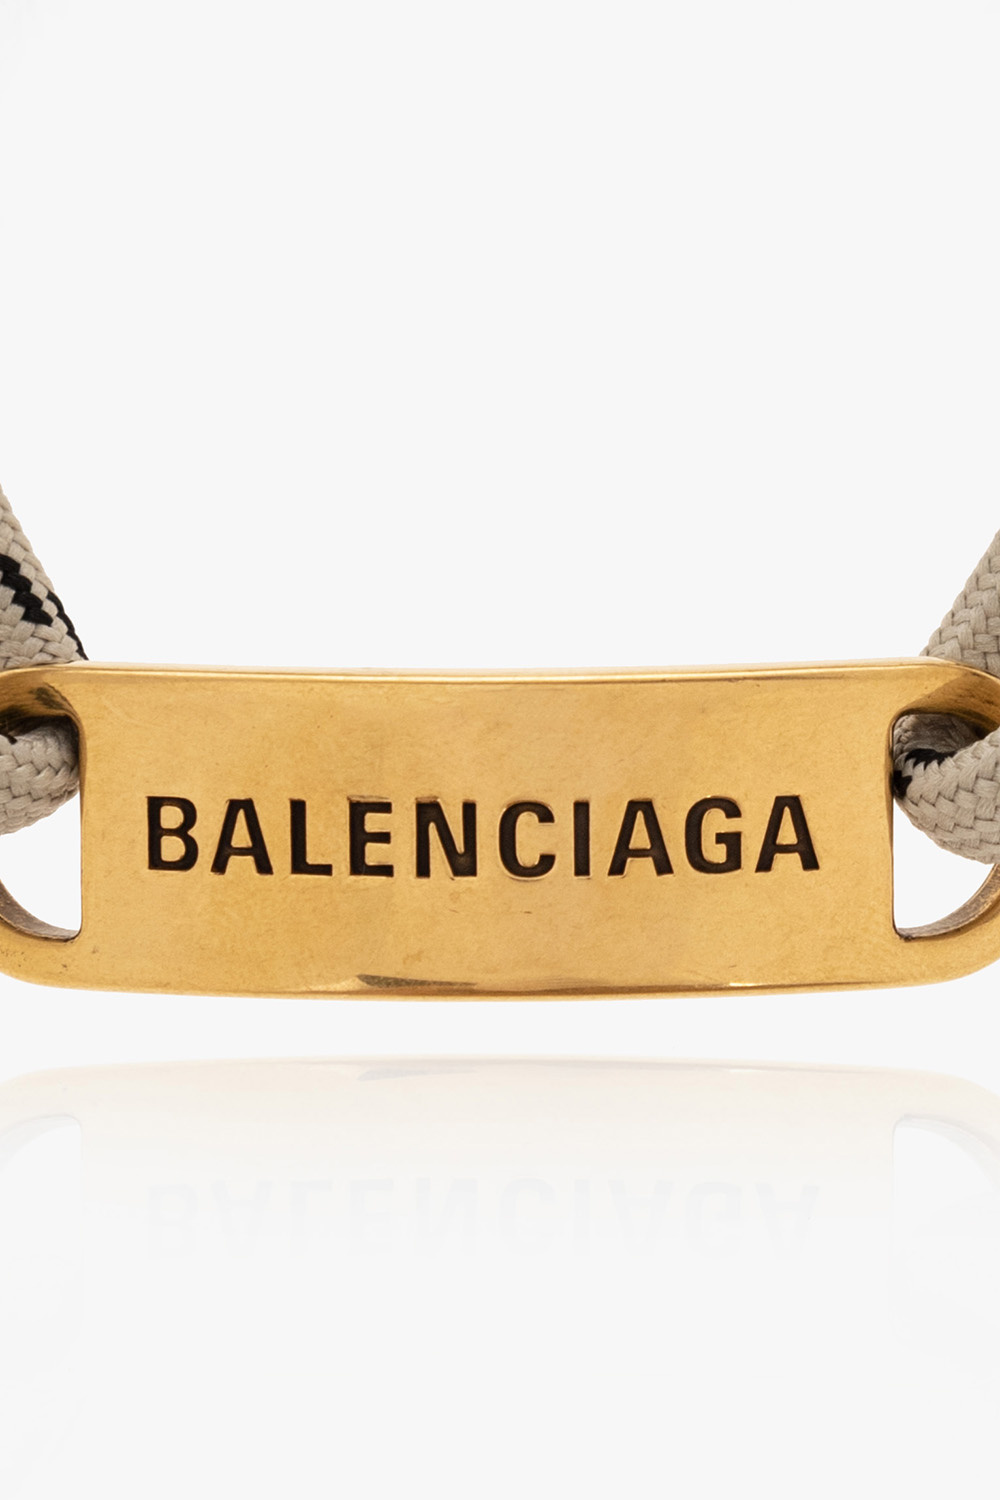 Balenciaga How does the SneakersbeShops Club work